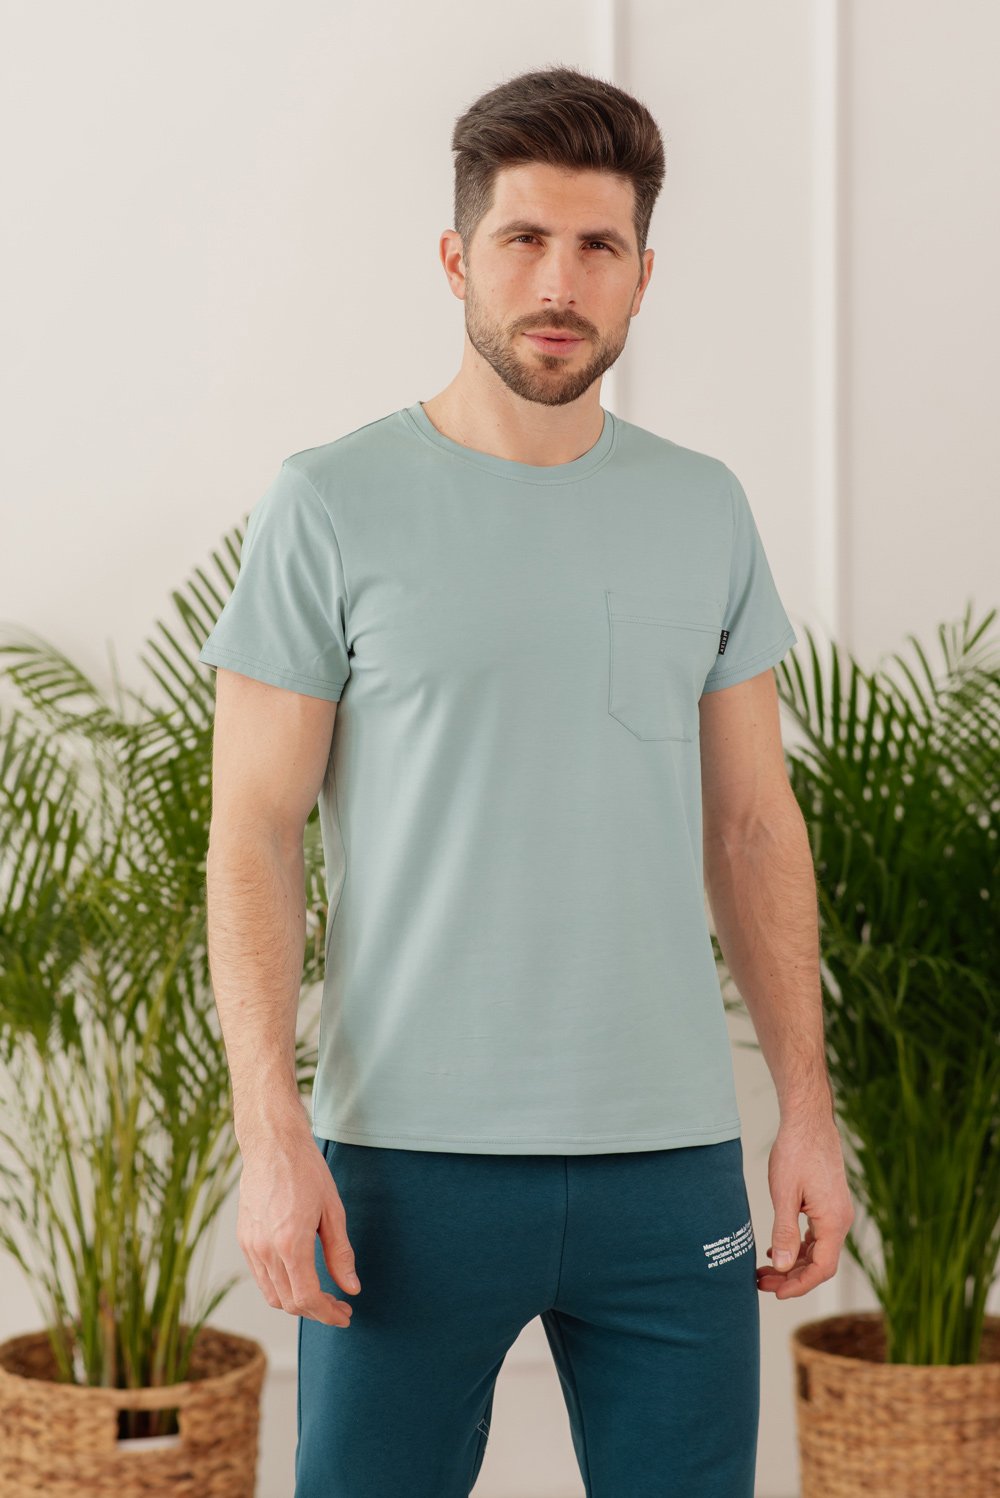 Turquoise cotton T-shirt